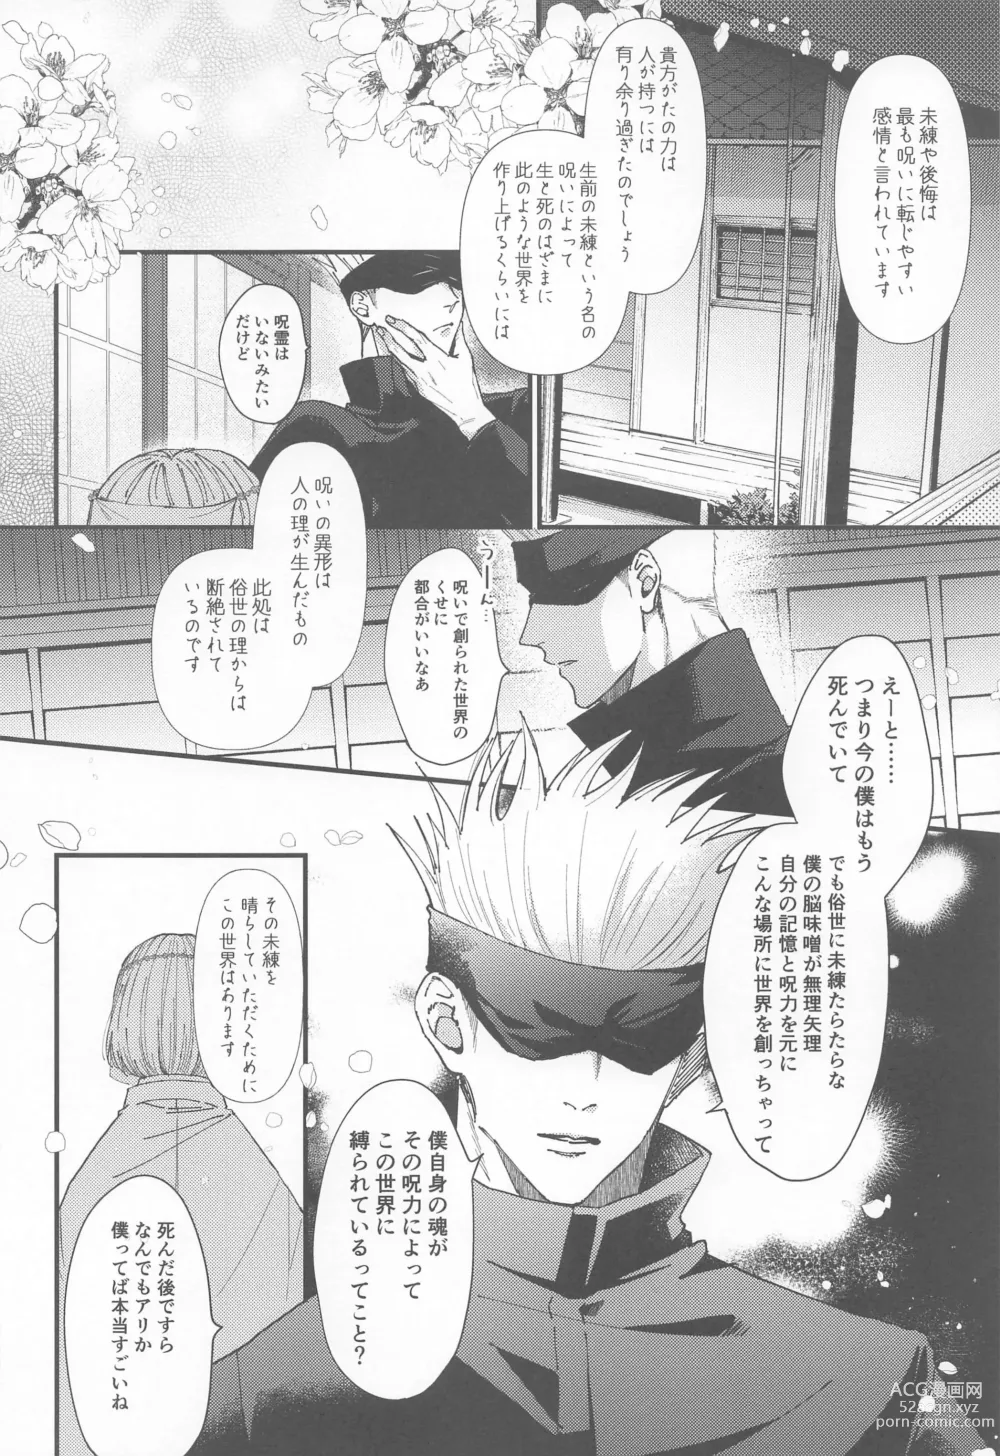 Page 3 of doujinshi Miren no Hakoniwa